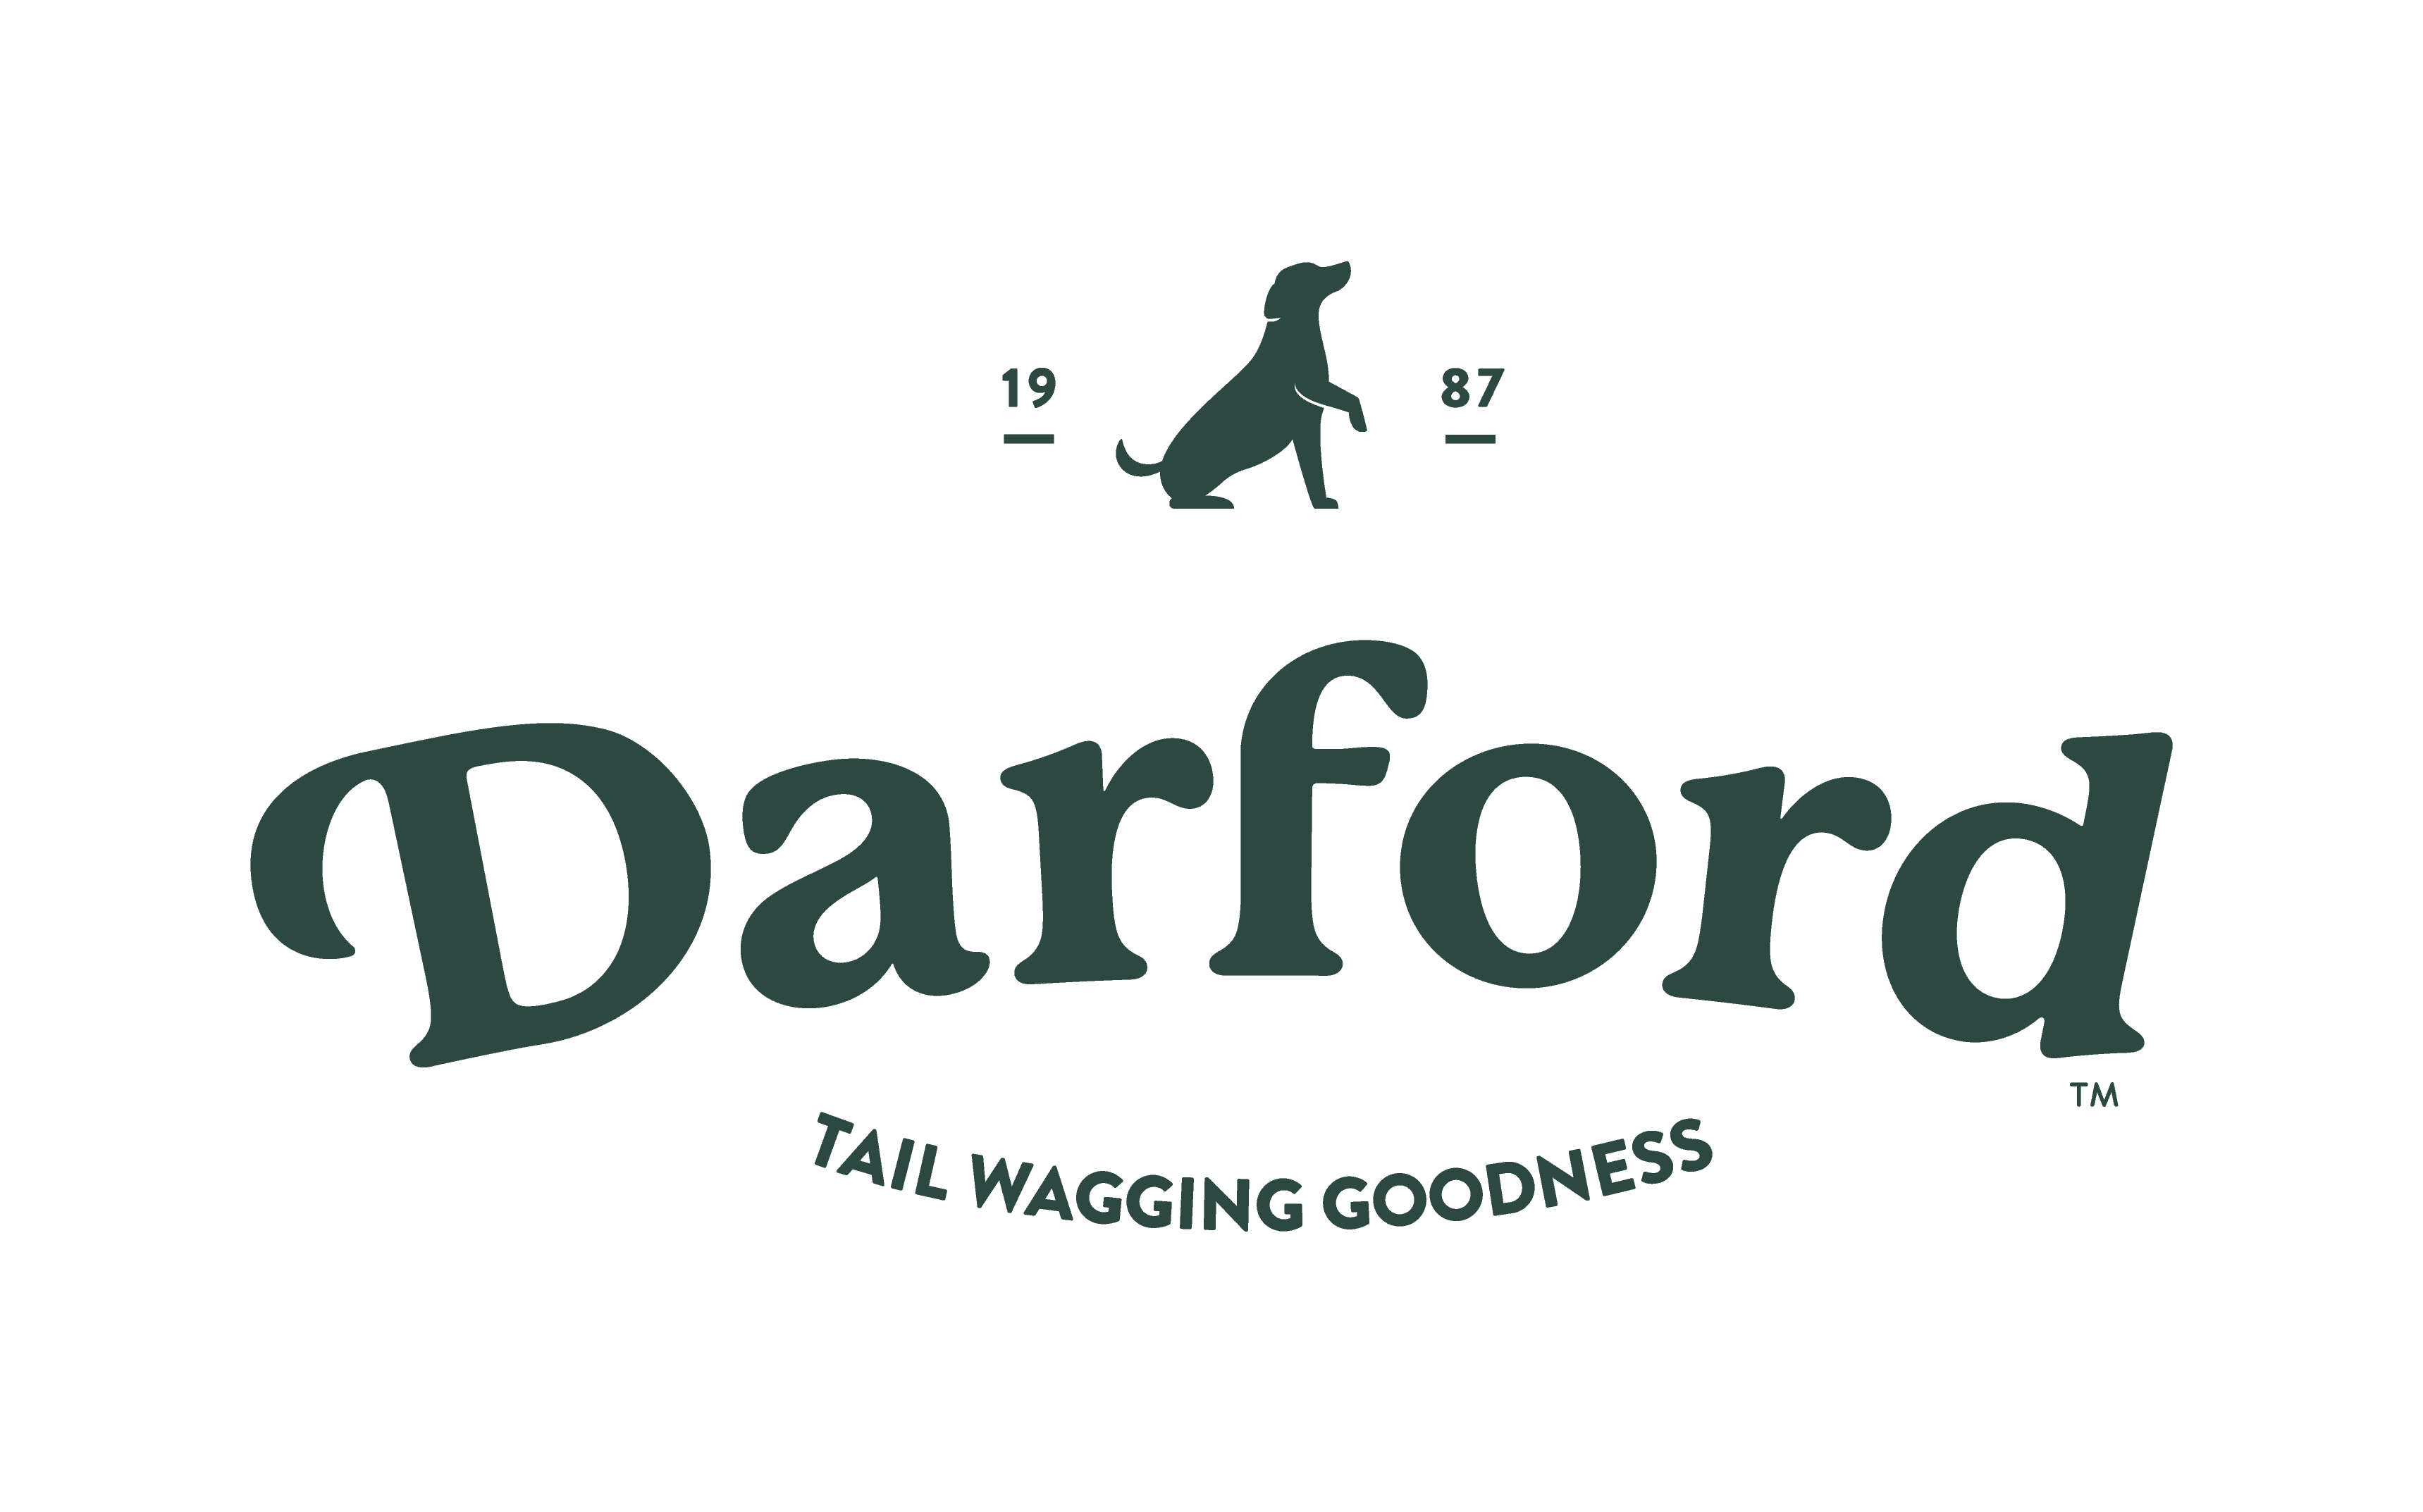 Darford dog treats logo